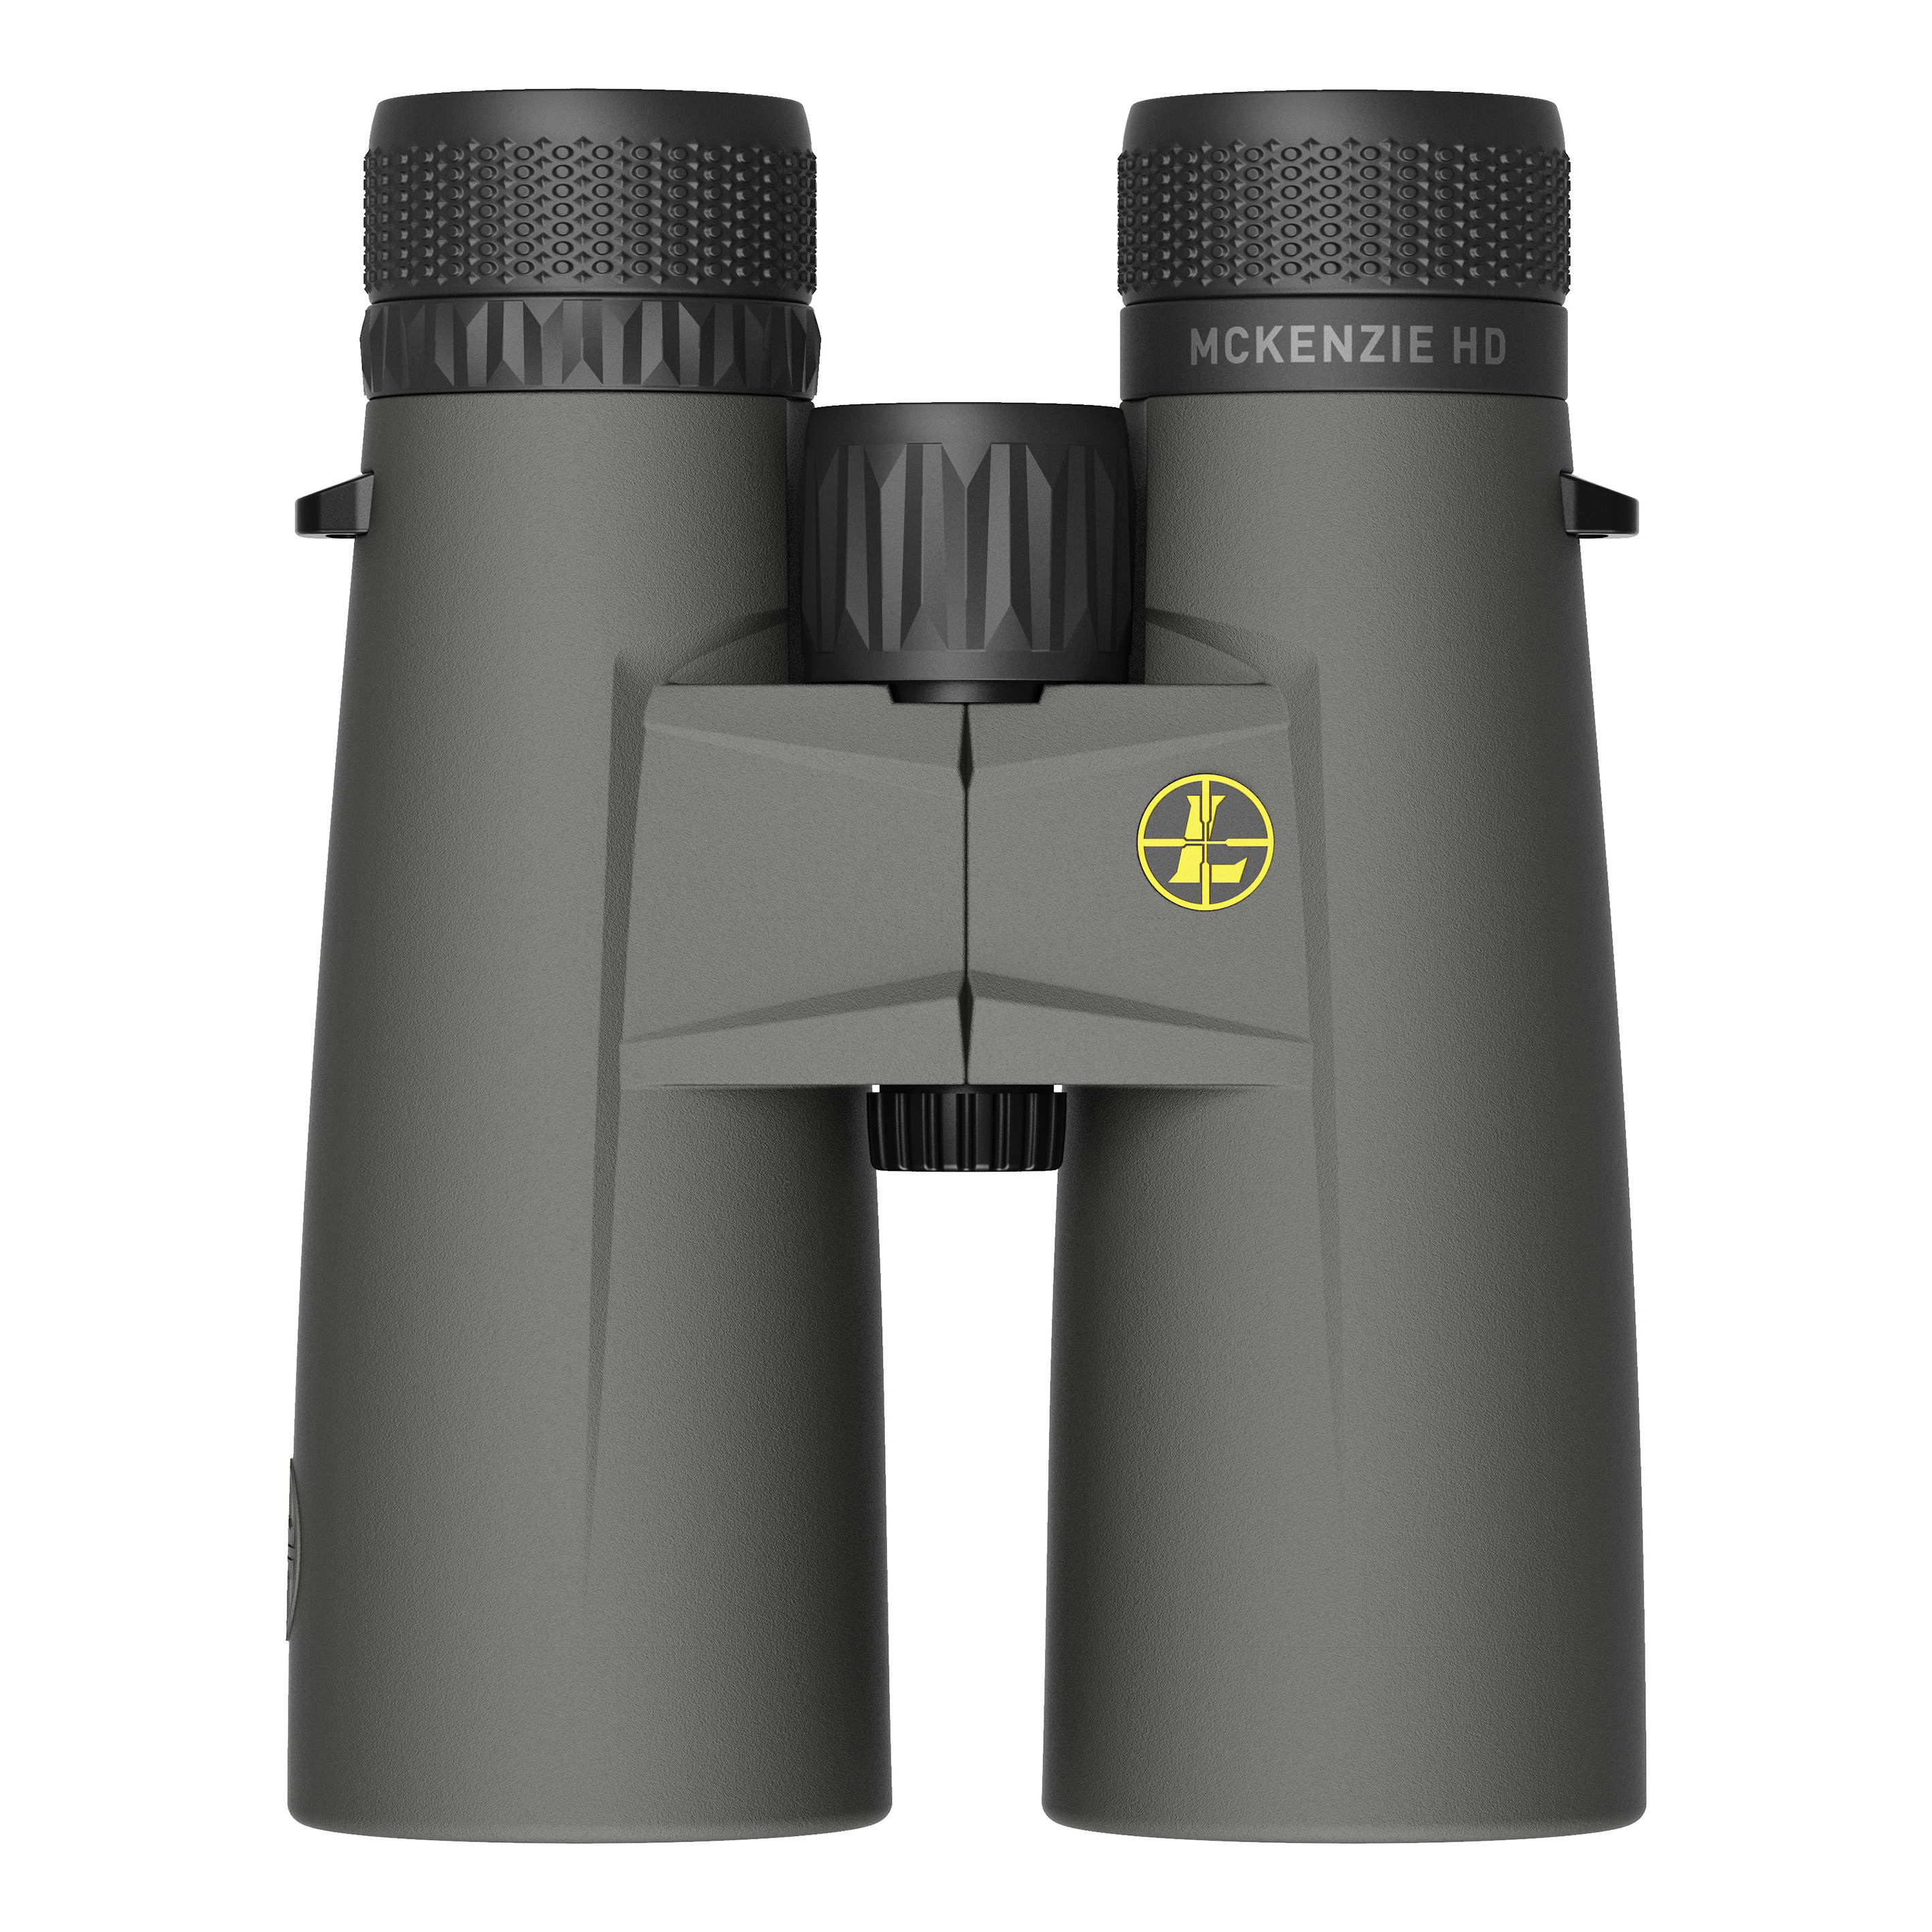 Leupold BX-1 McKenzie™ HD Binoculars - 12x50mm